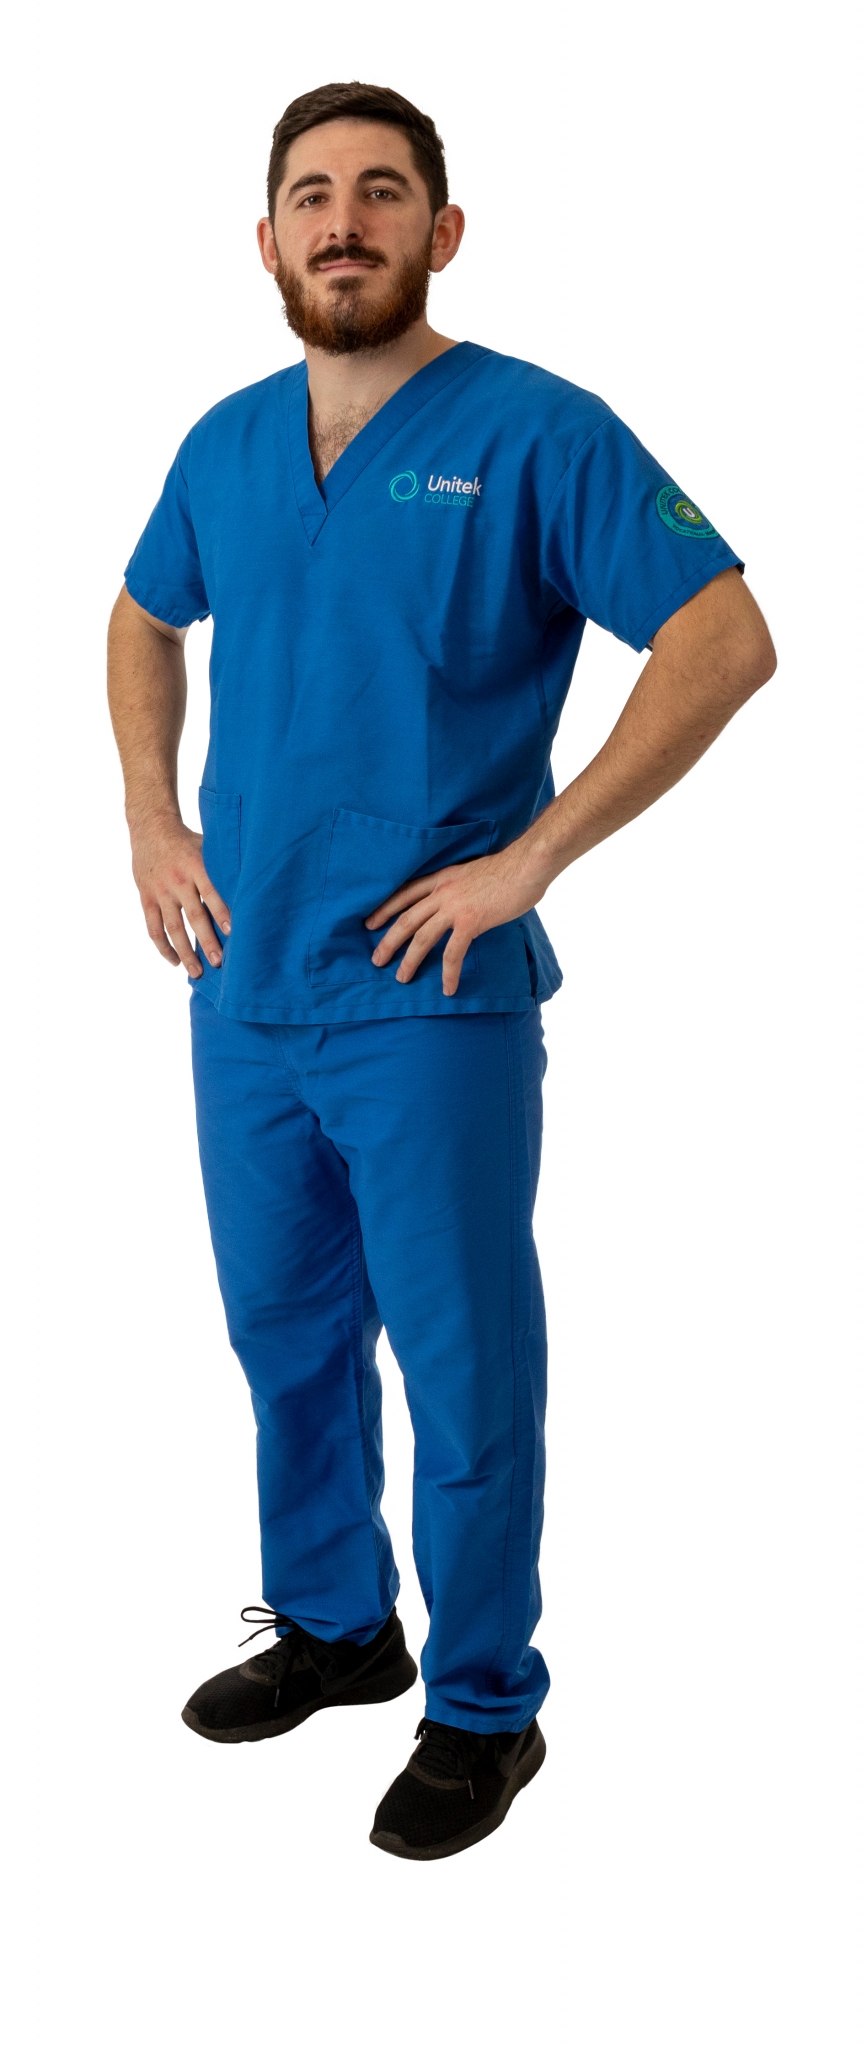 Enfermero en batas azules